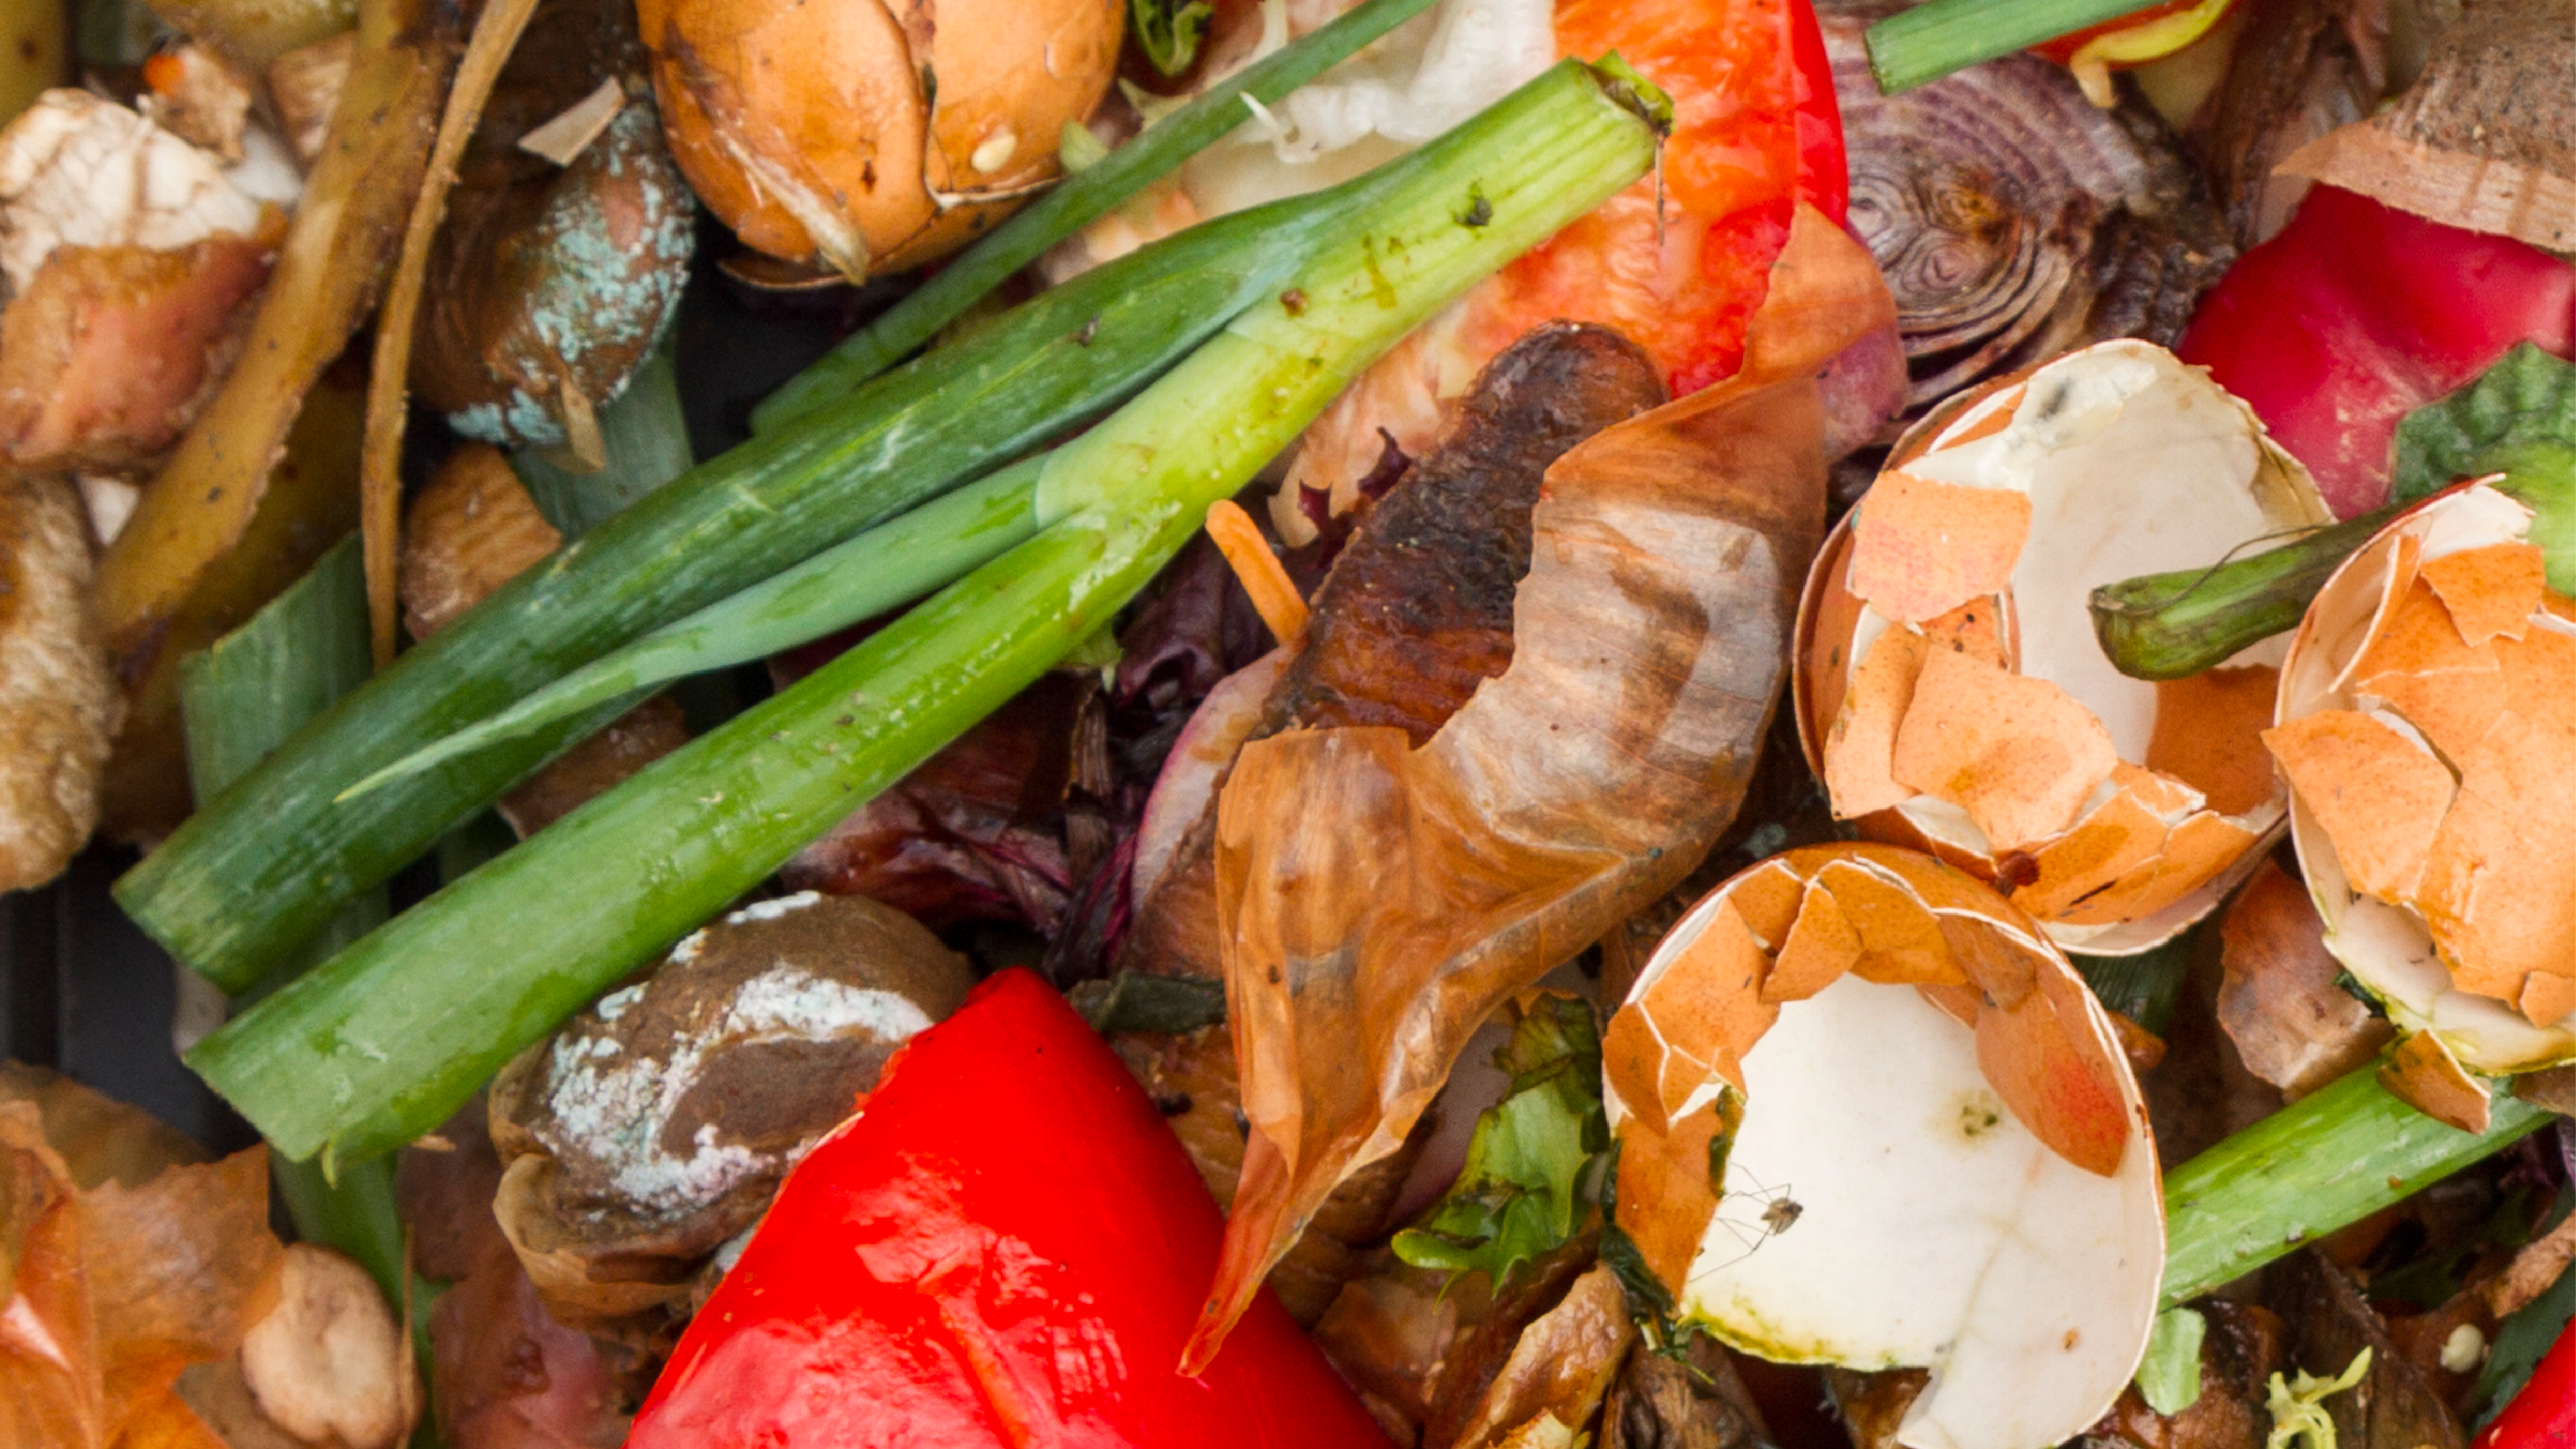 Food Waste: Ripe for change